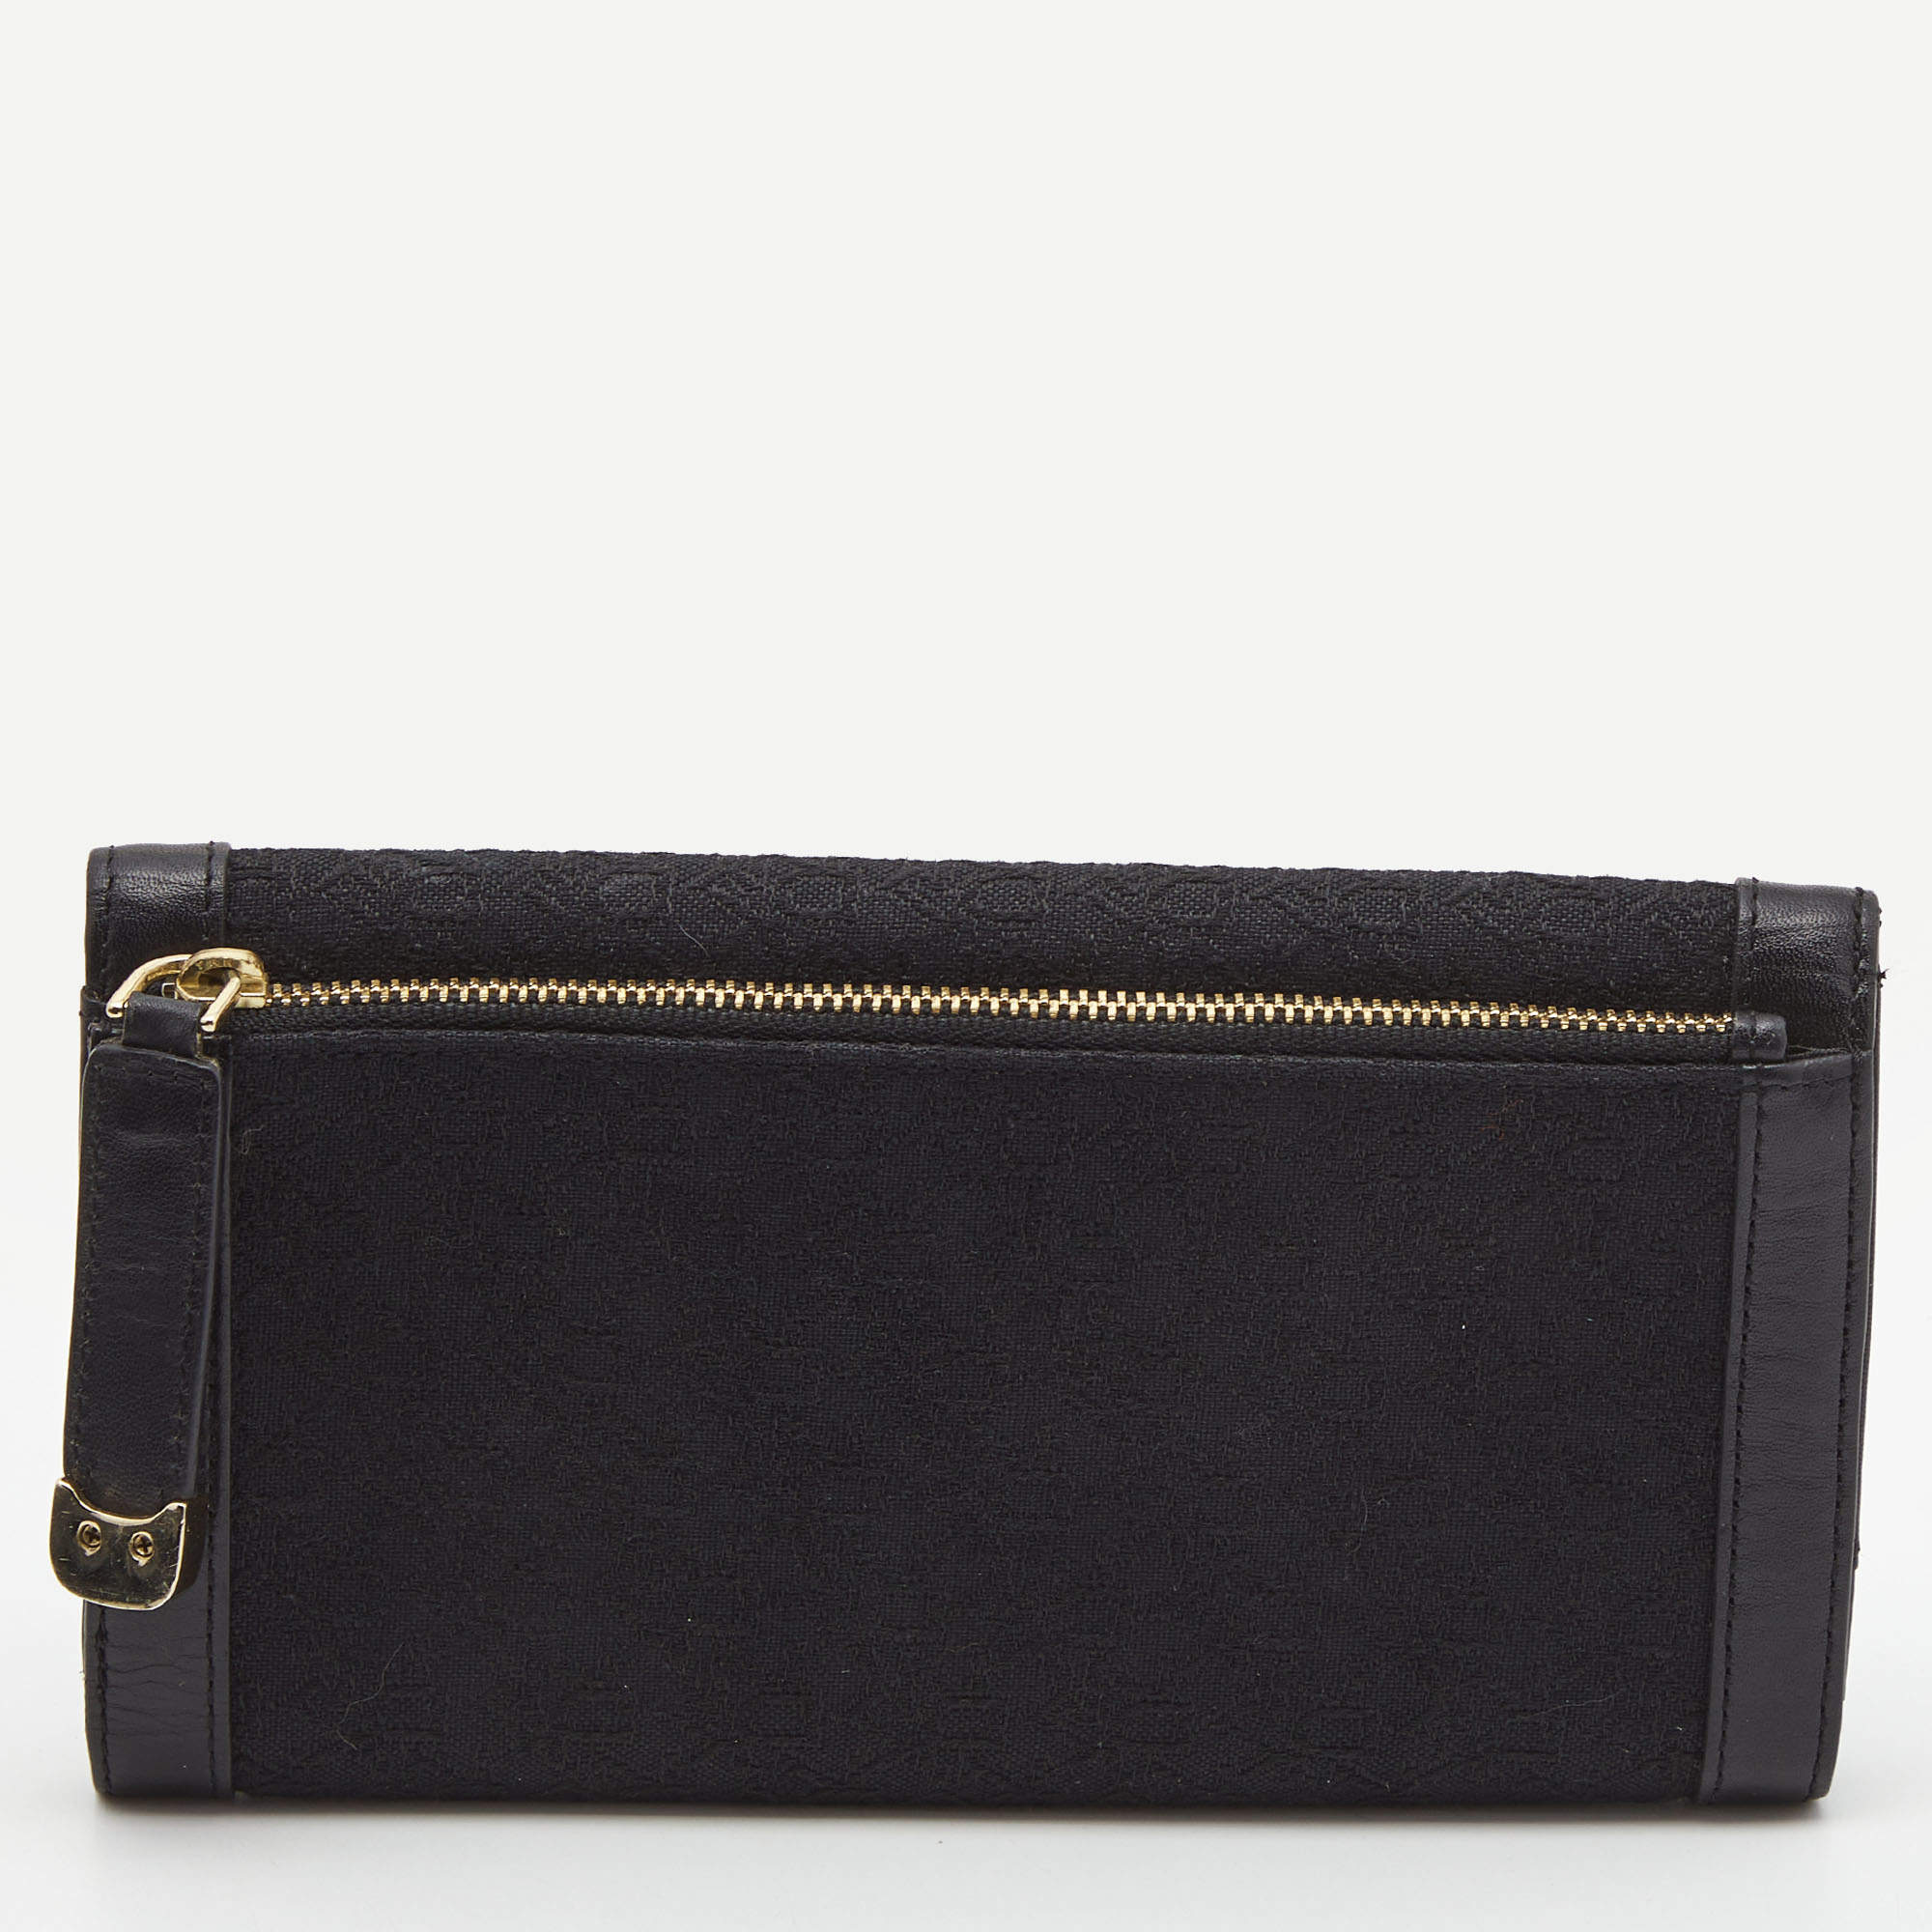 Buy DKNY Allure Black Colour ABS Hard One Size Sling Bag Online